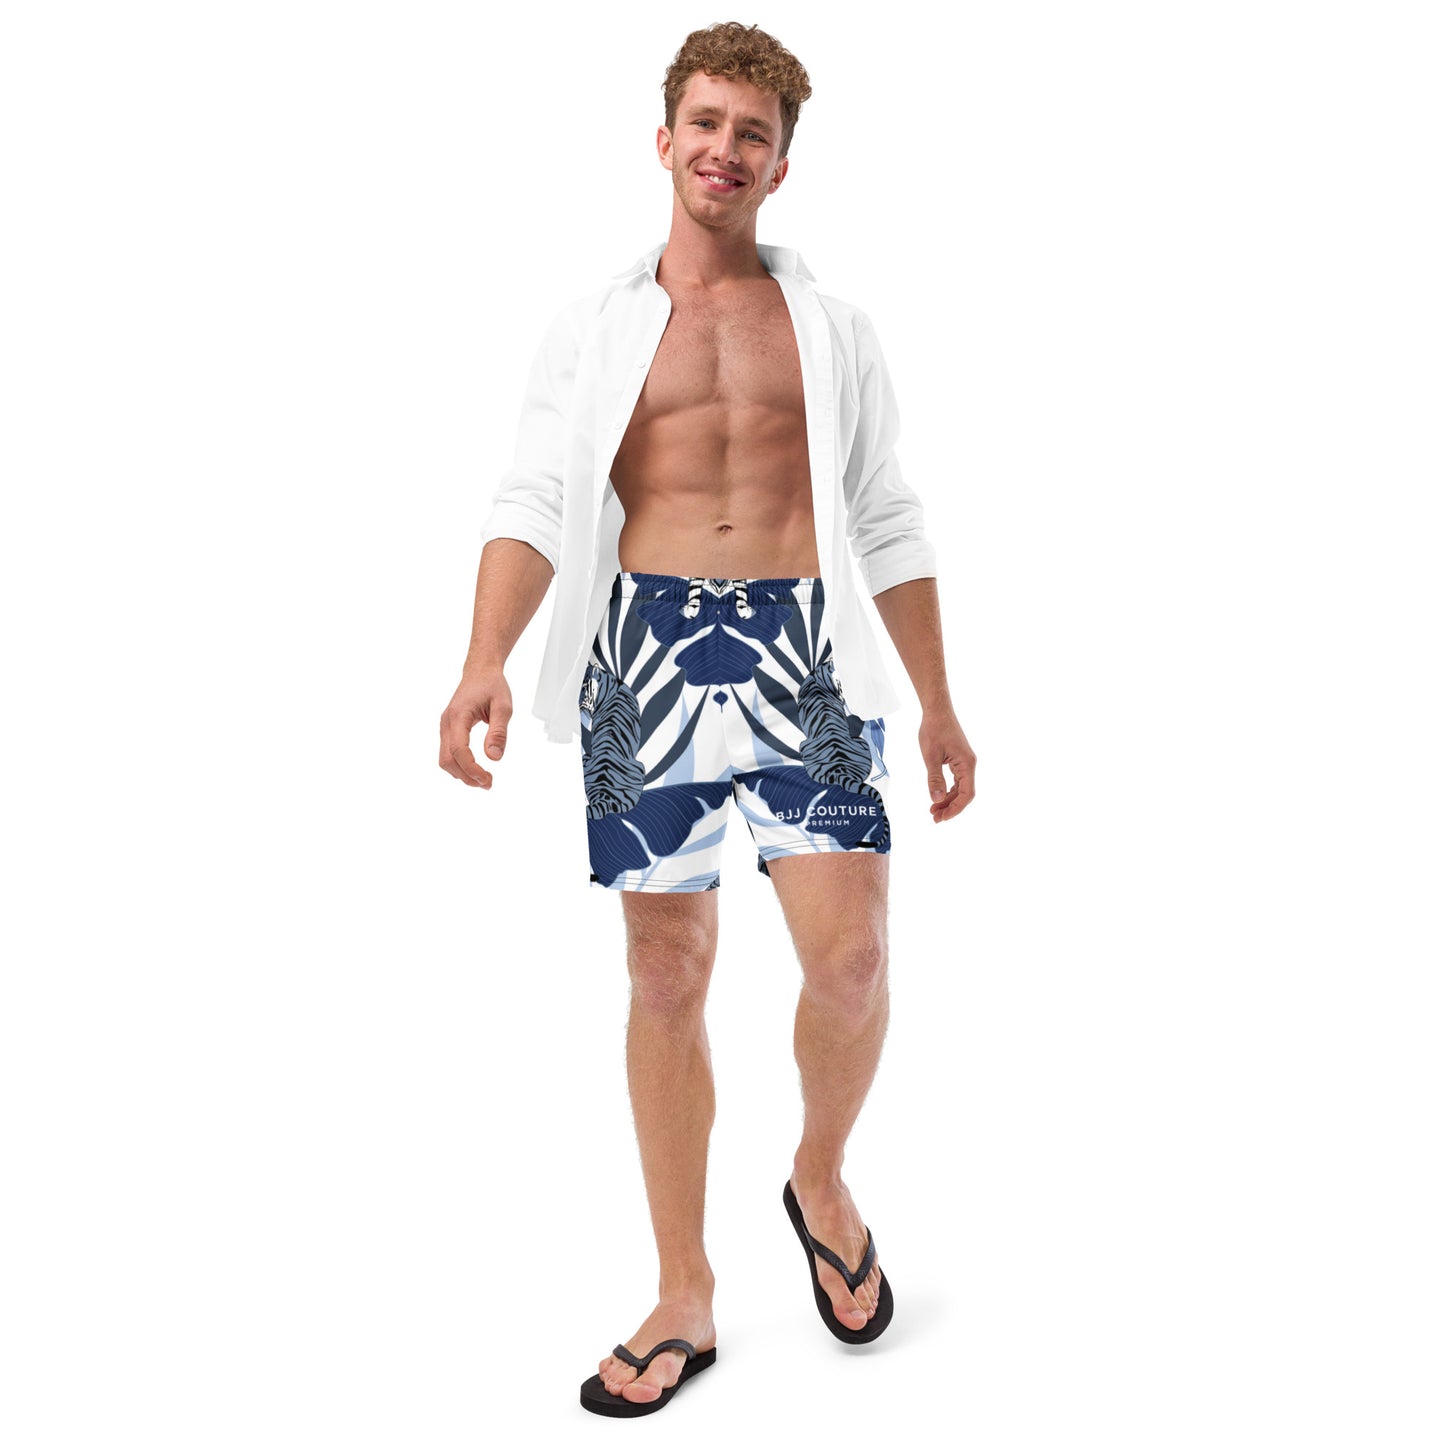 BJJ Couture Premium Aqua Tiger Jungle Print Men's swim trunks